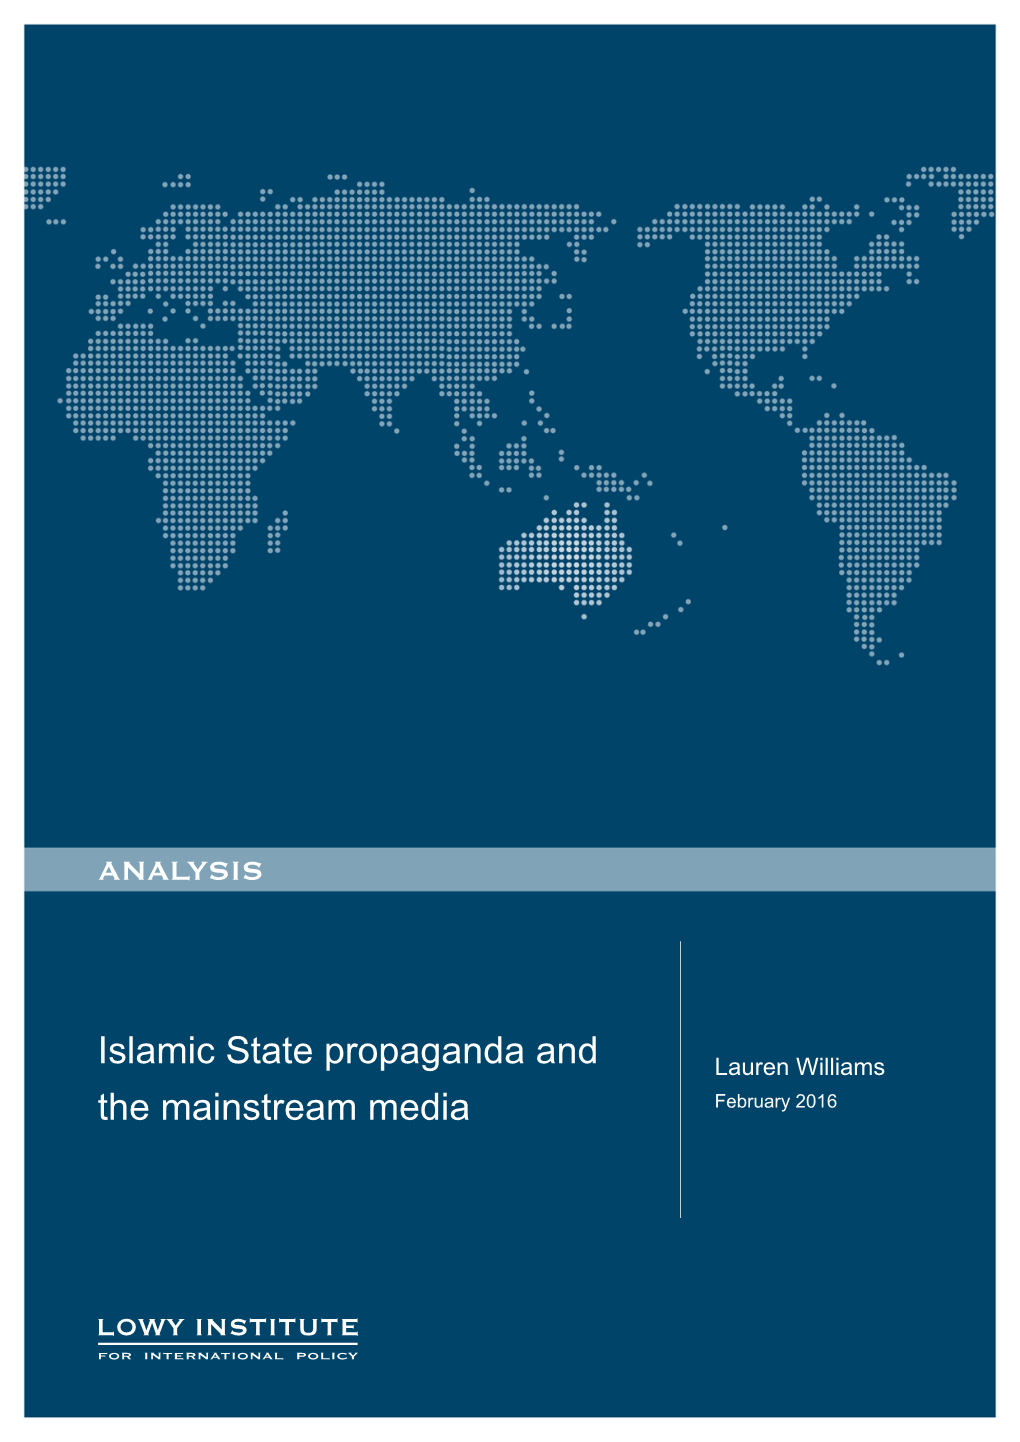 Islamic State Propaganda and the Mainstream Media